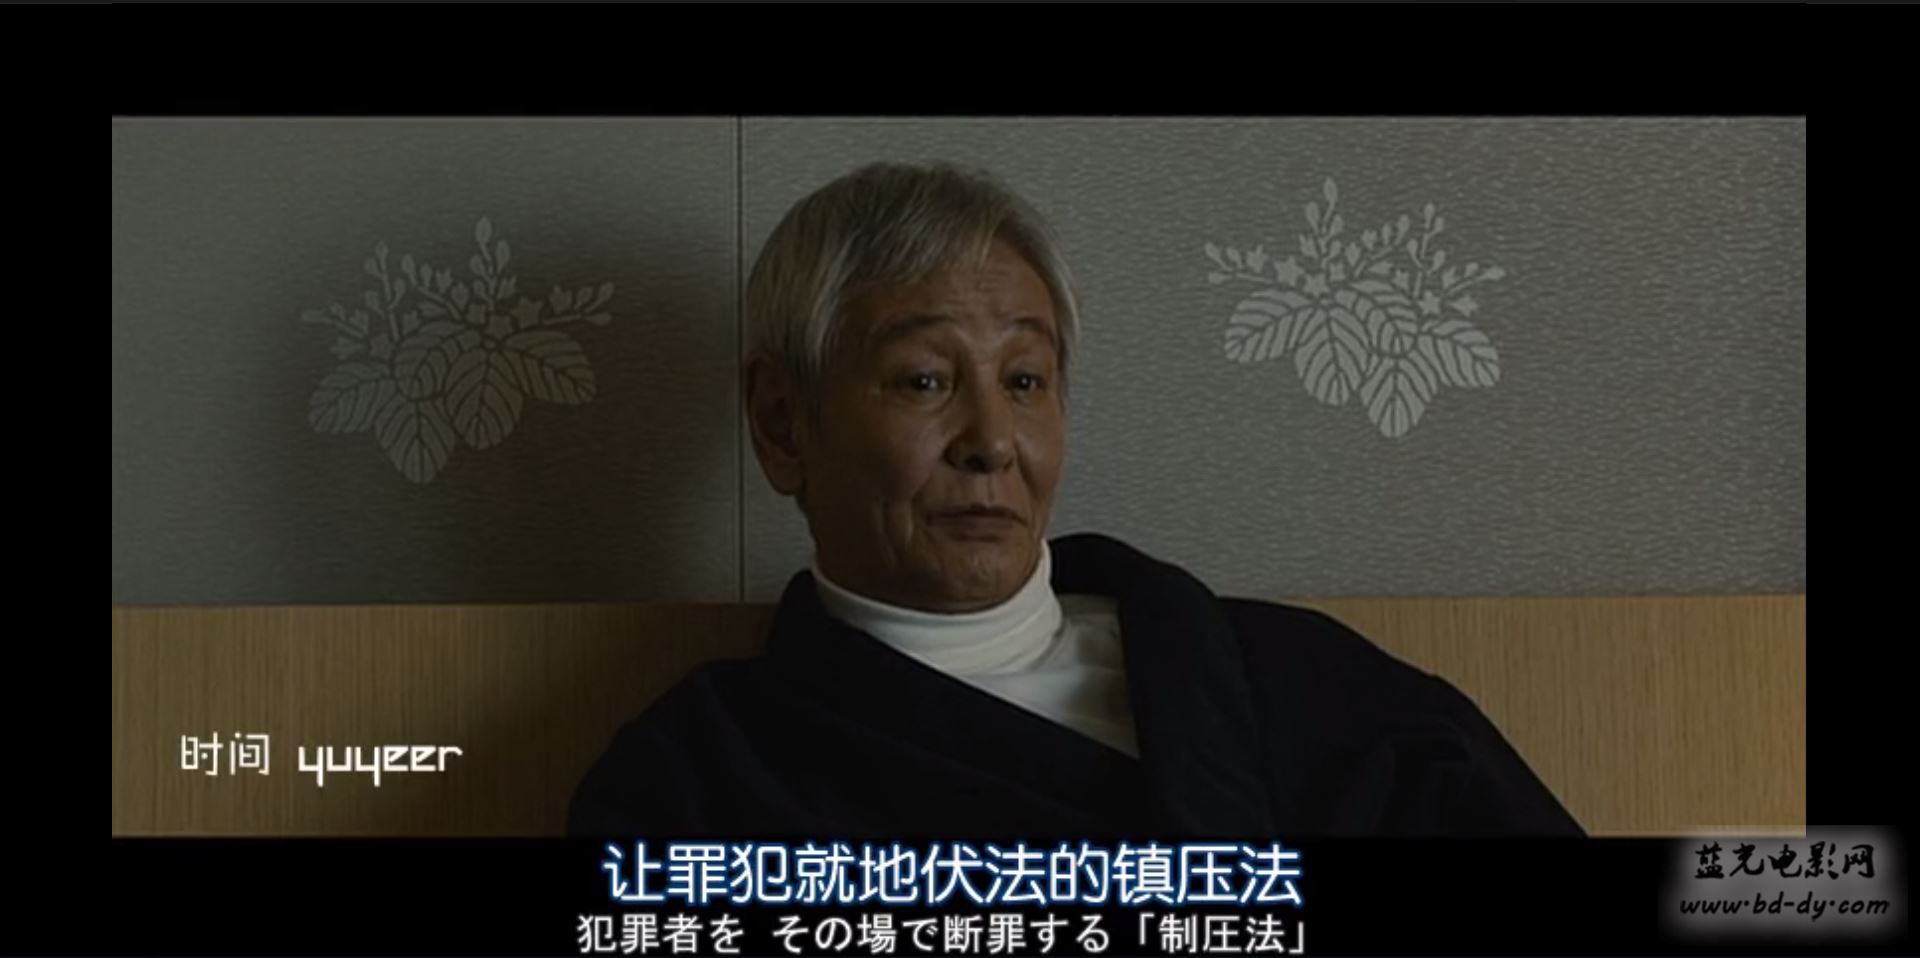 《S-最后的警官 电影版》2015日本动作犯罪.DVD.中日双字截图;jsessionid=c0ShqBx9Wk_uHz5TNa20SrGd6tHKOUiYYQbBOO0Z